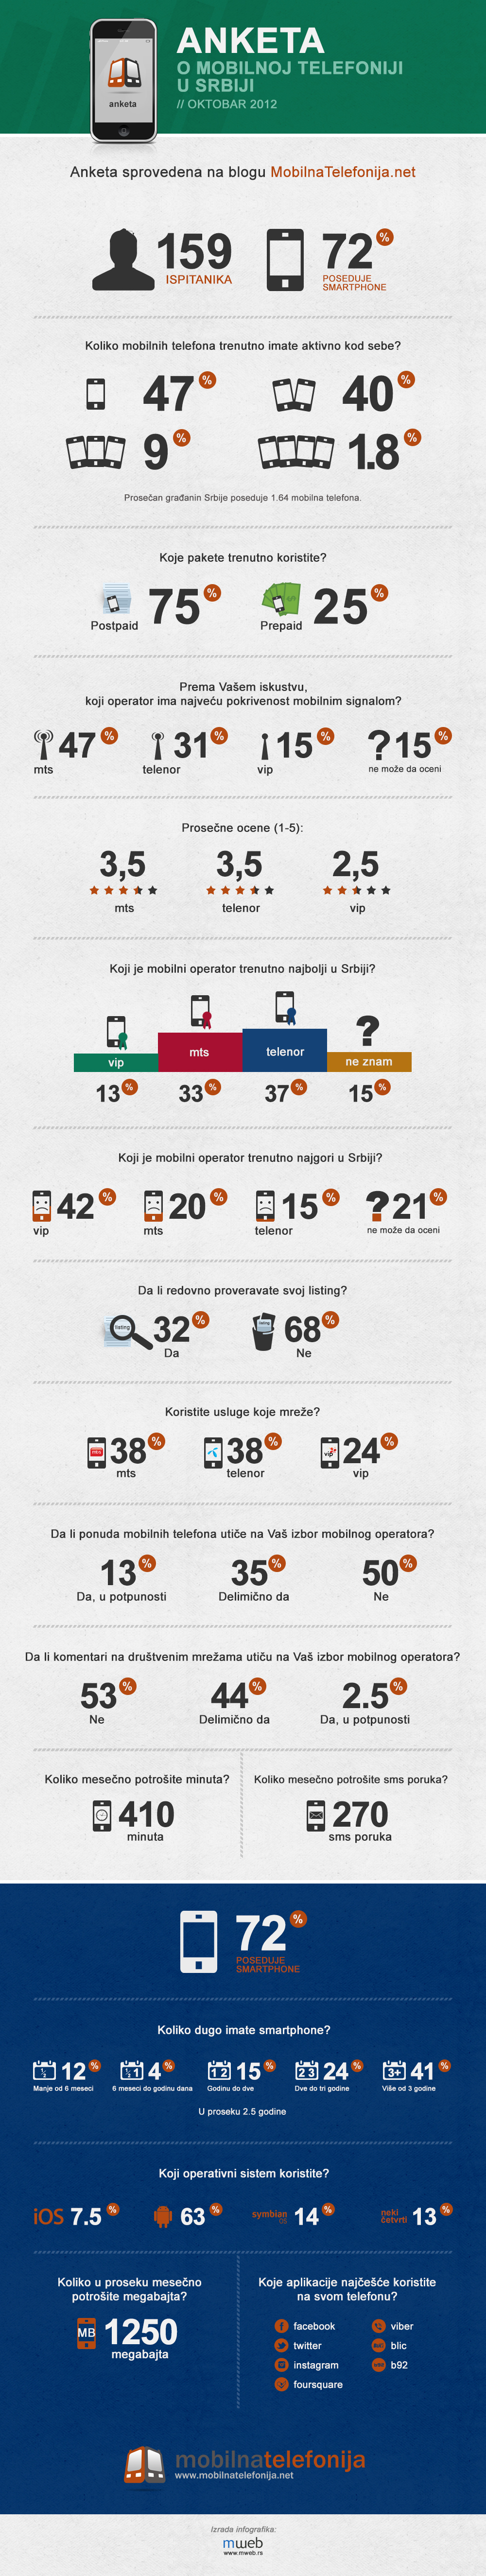 infografik anketa mobilna telefonija